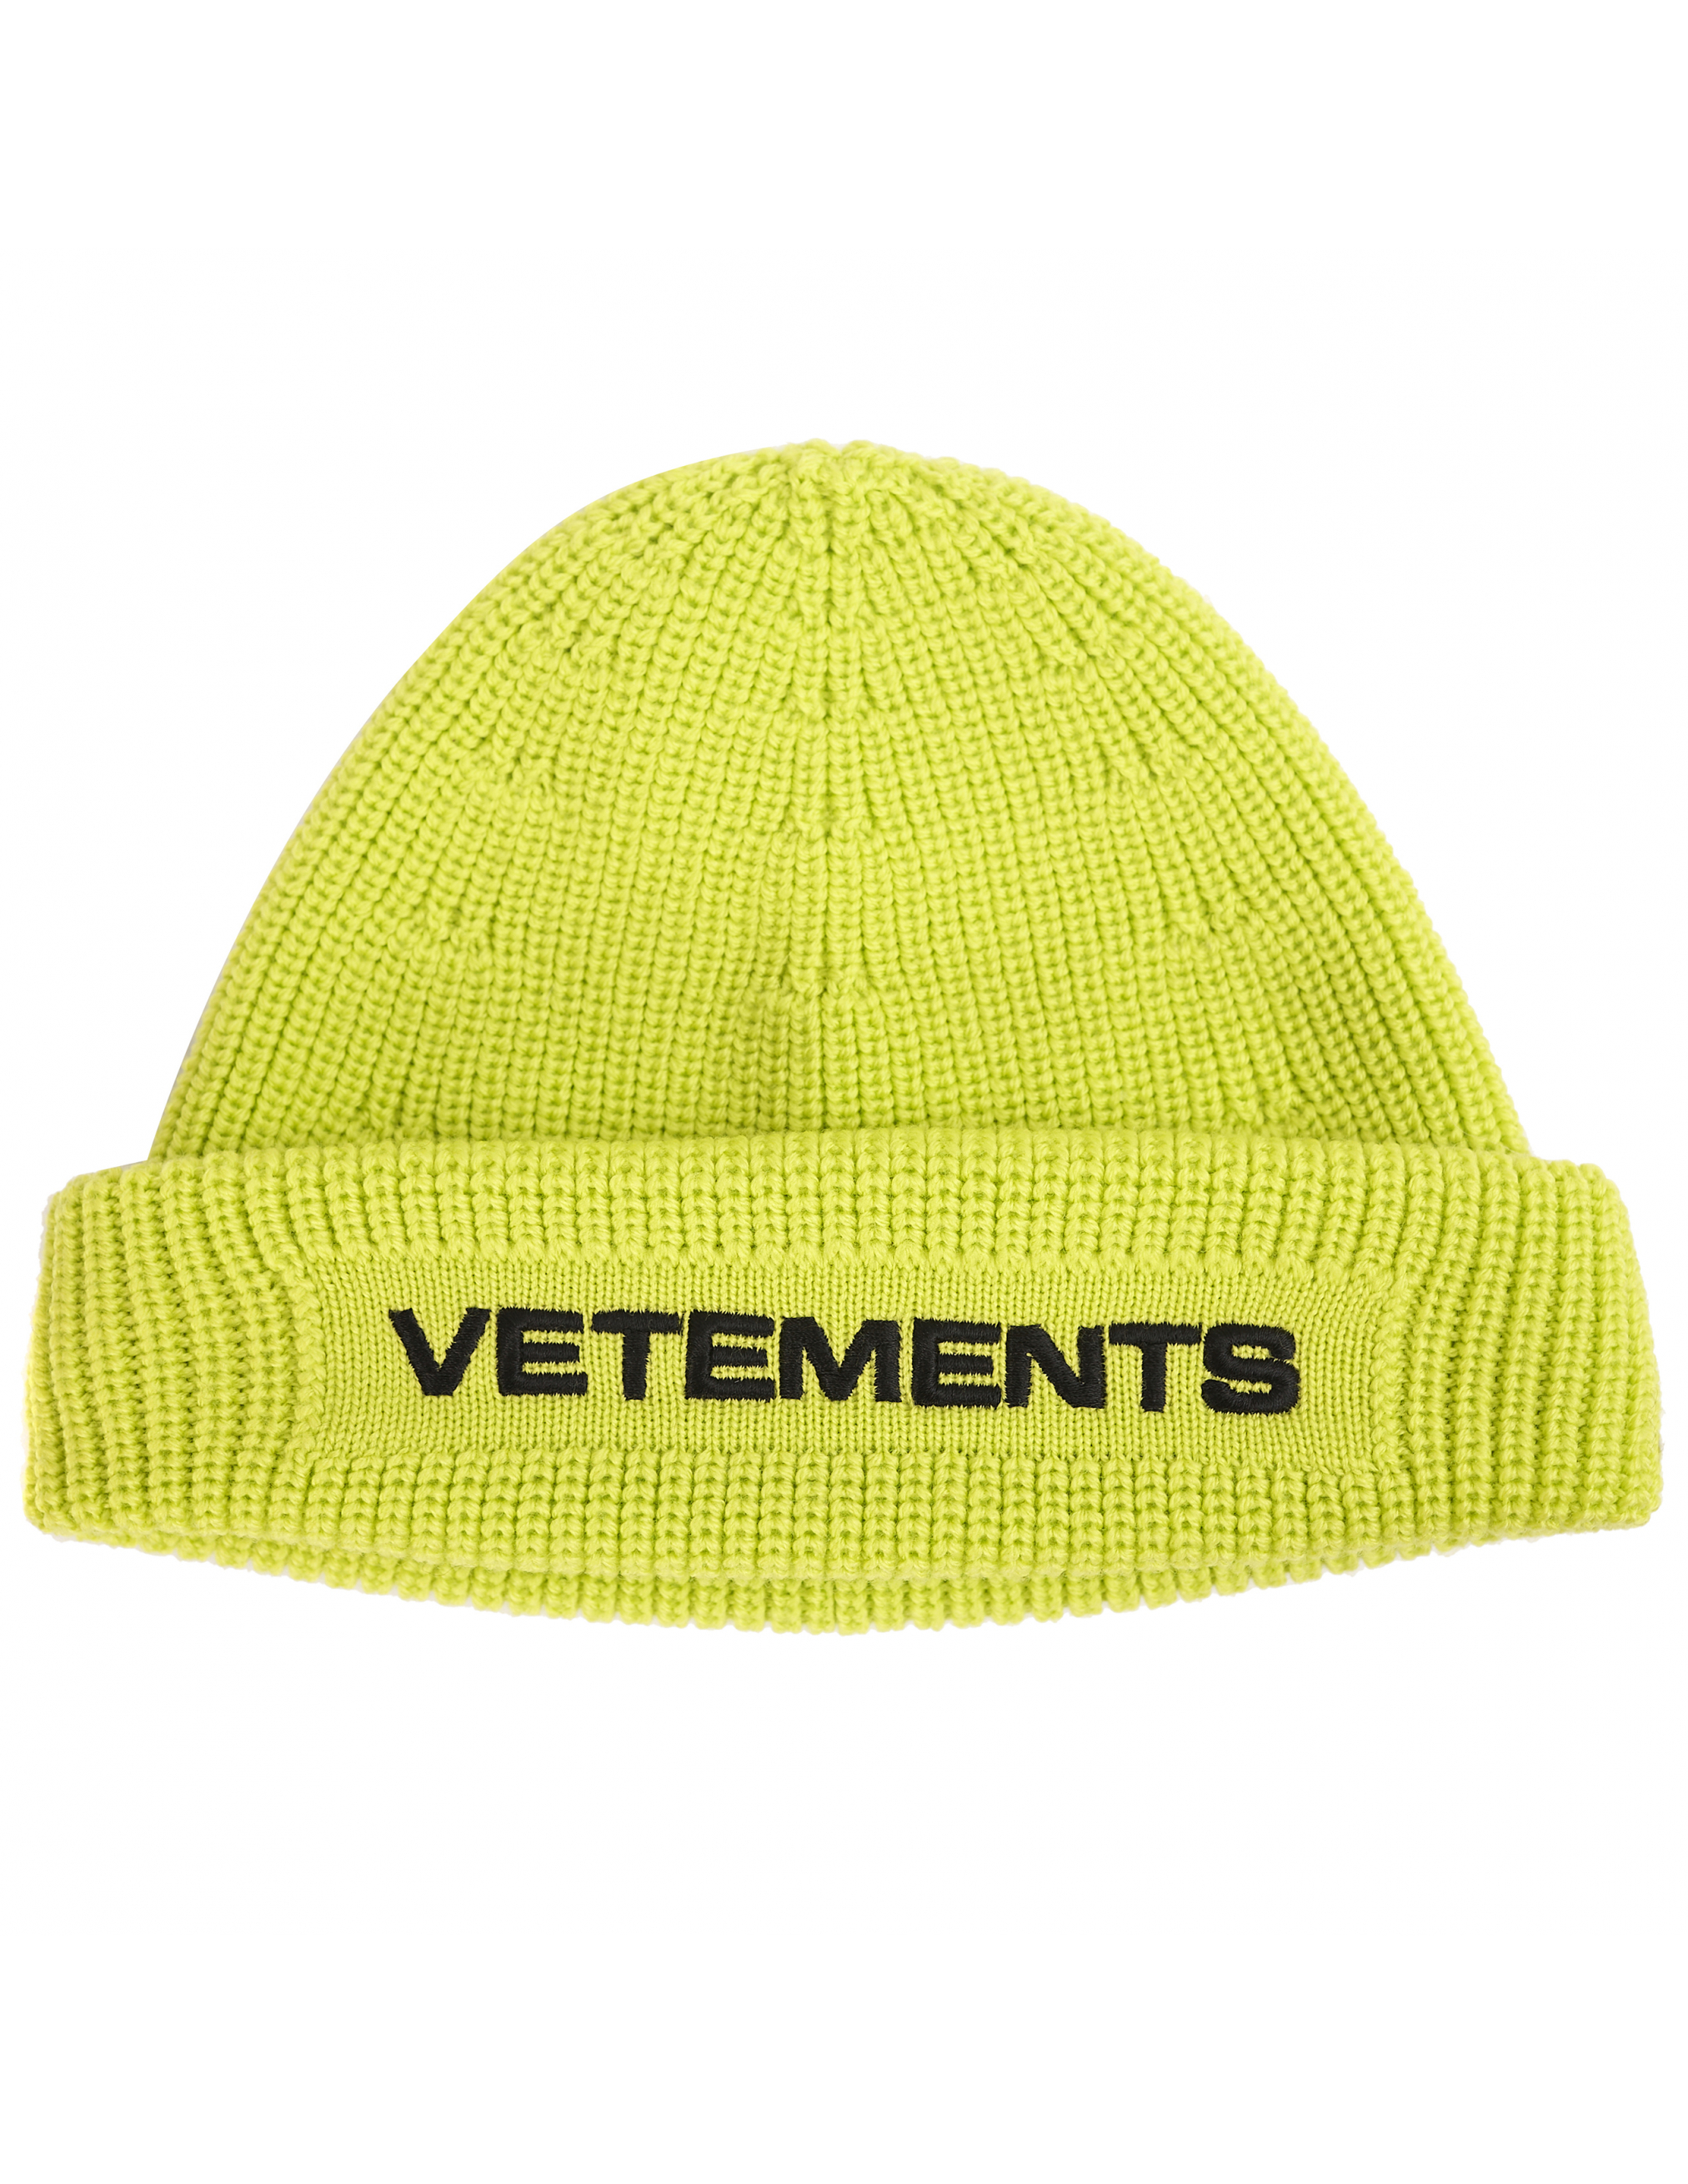 Шерстяная шапка неонового цвета Vetements UA52KN300Y/2901, размер One Size UA52KN300Y/2901 - фото 1